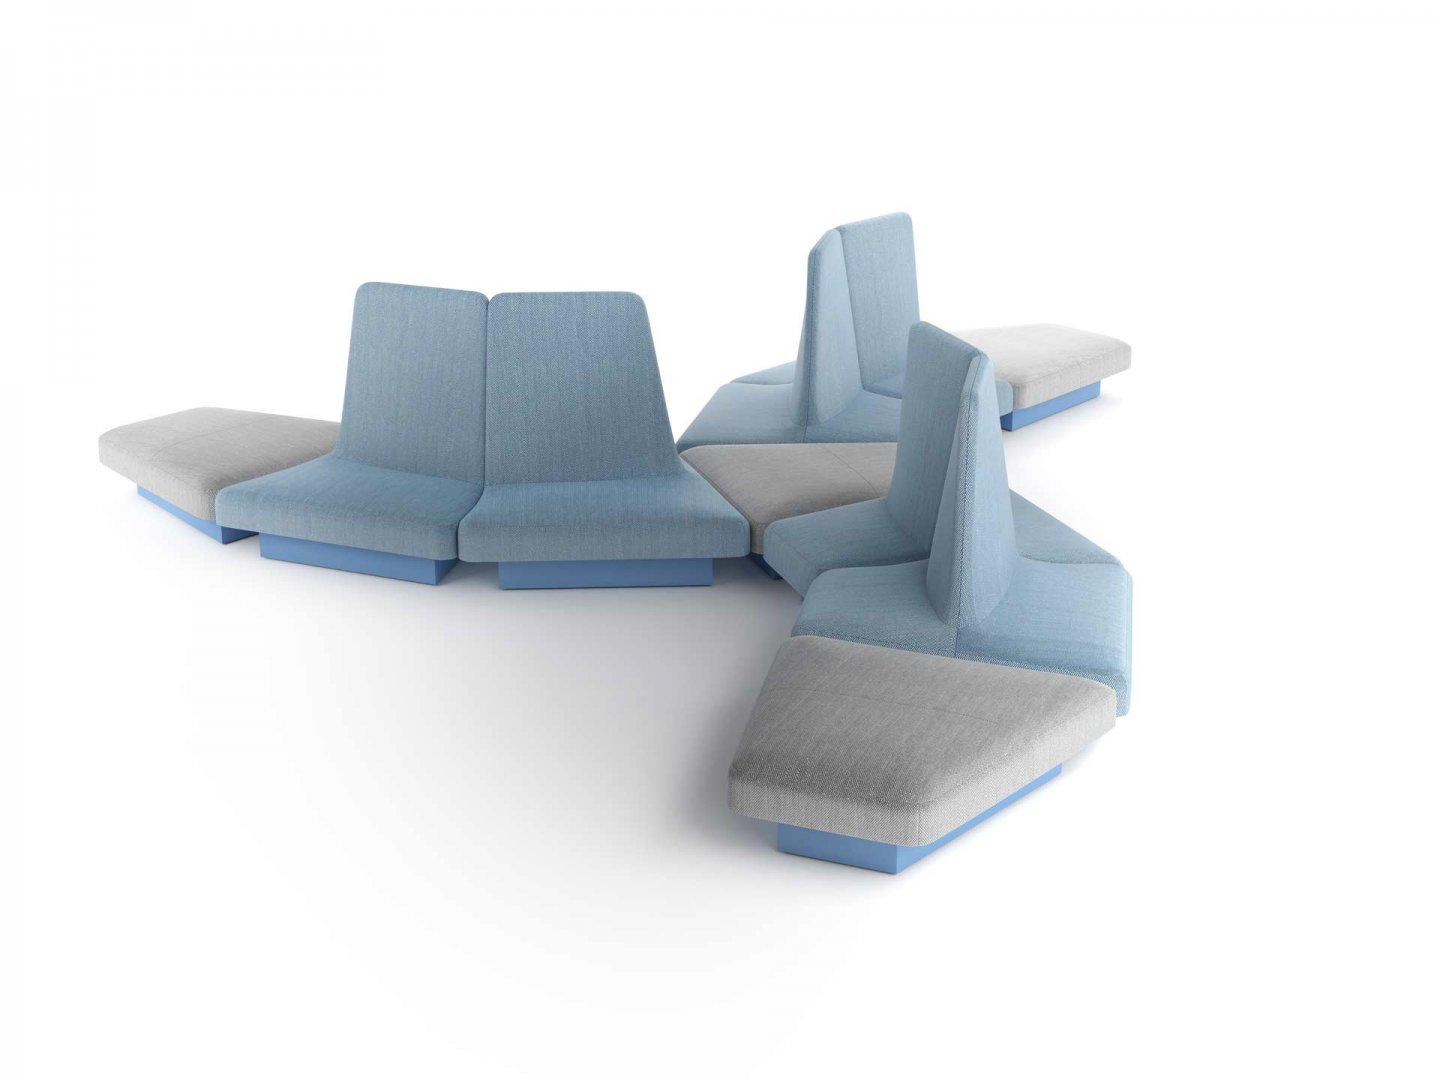 Rhyme modular seating | Workspace Studio1440 x 1080